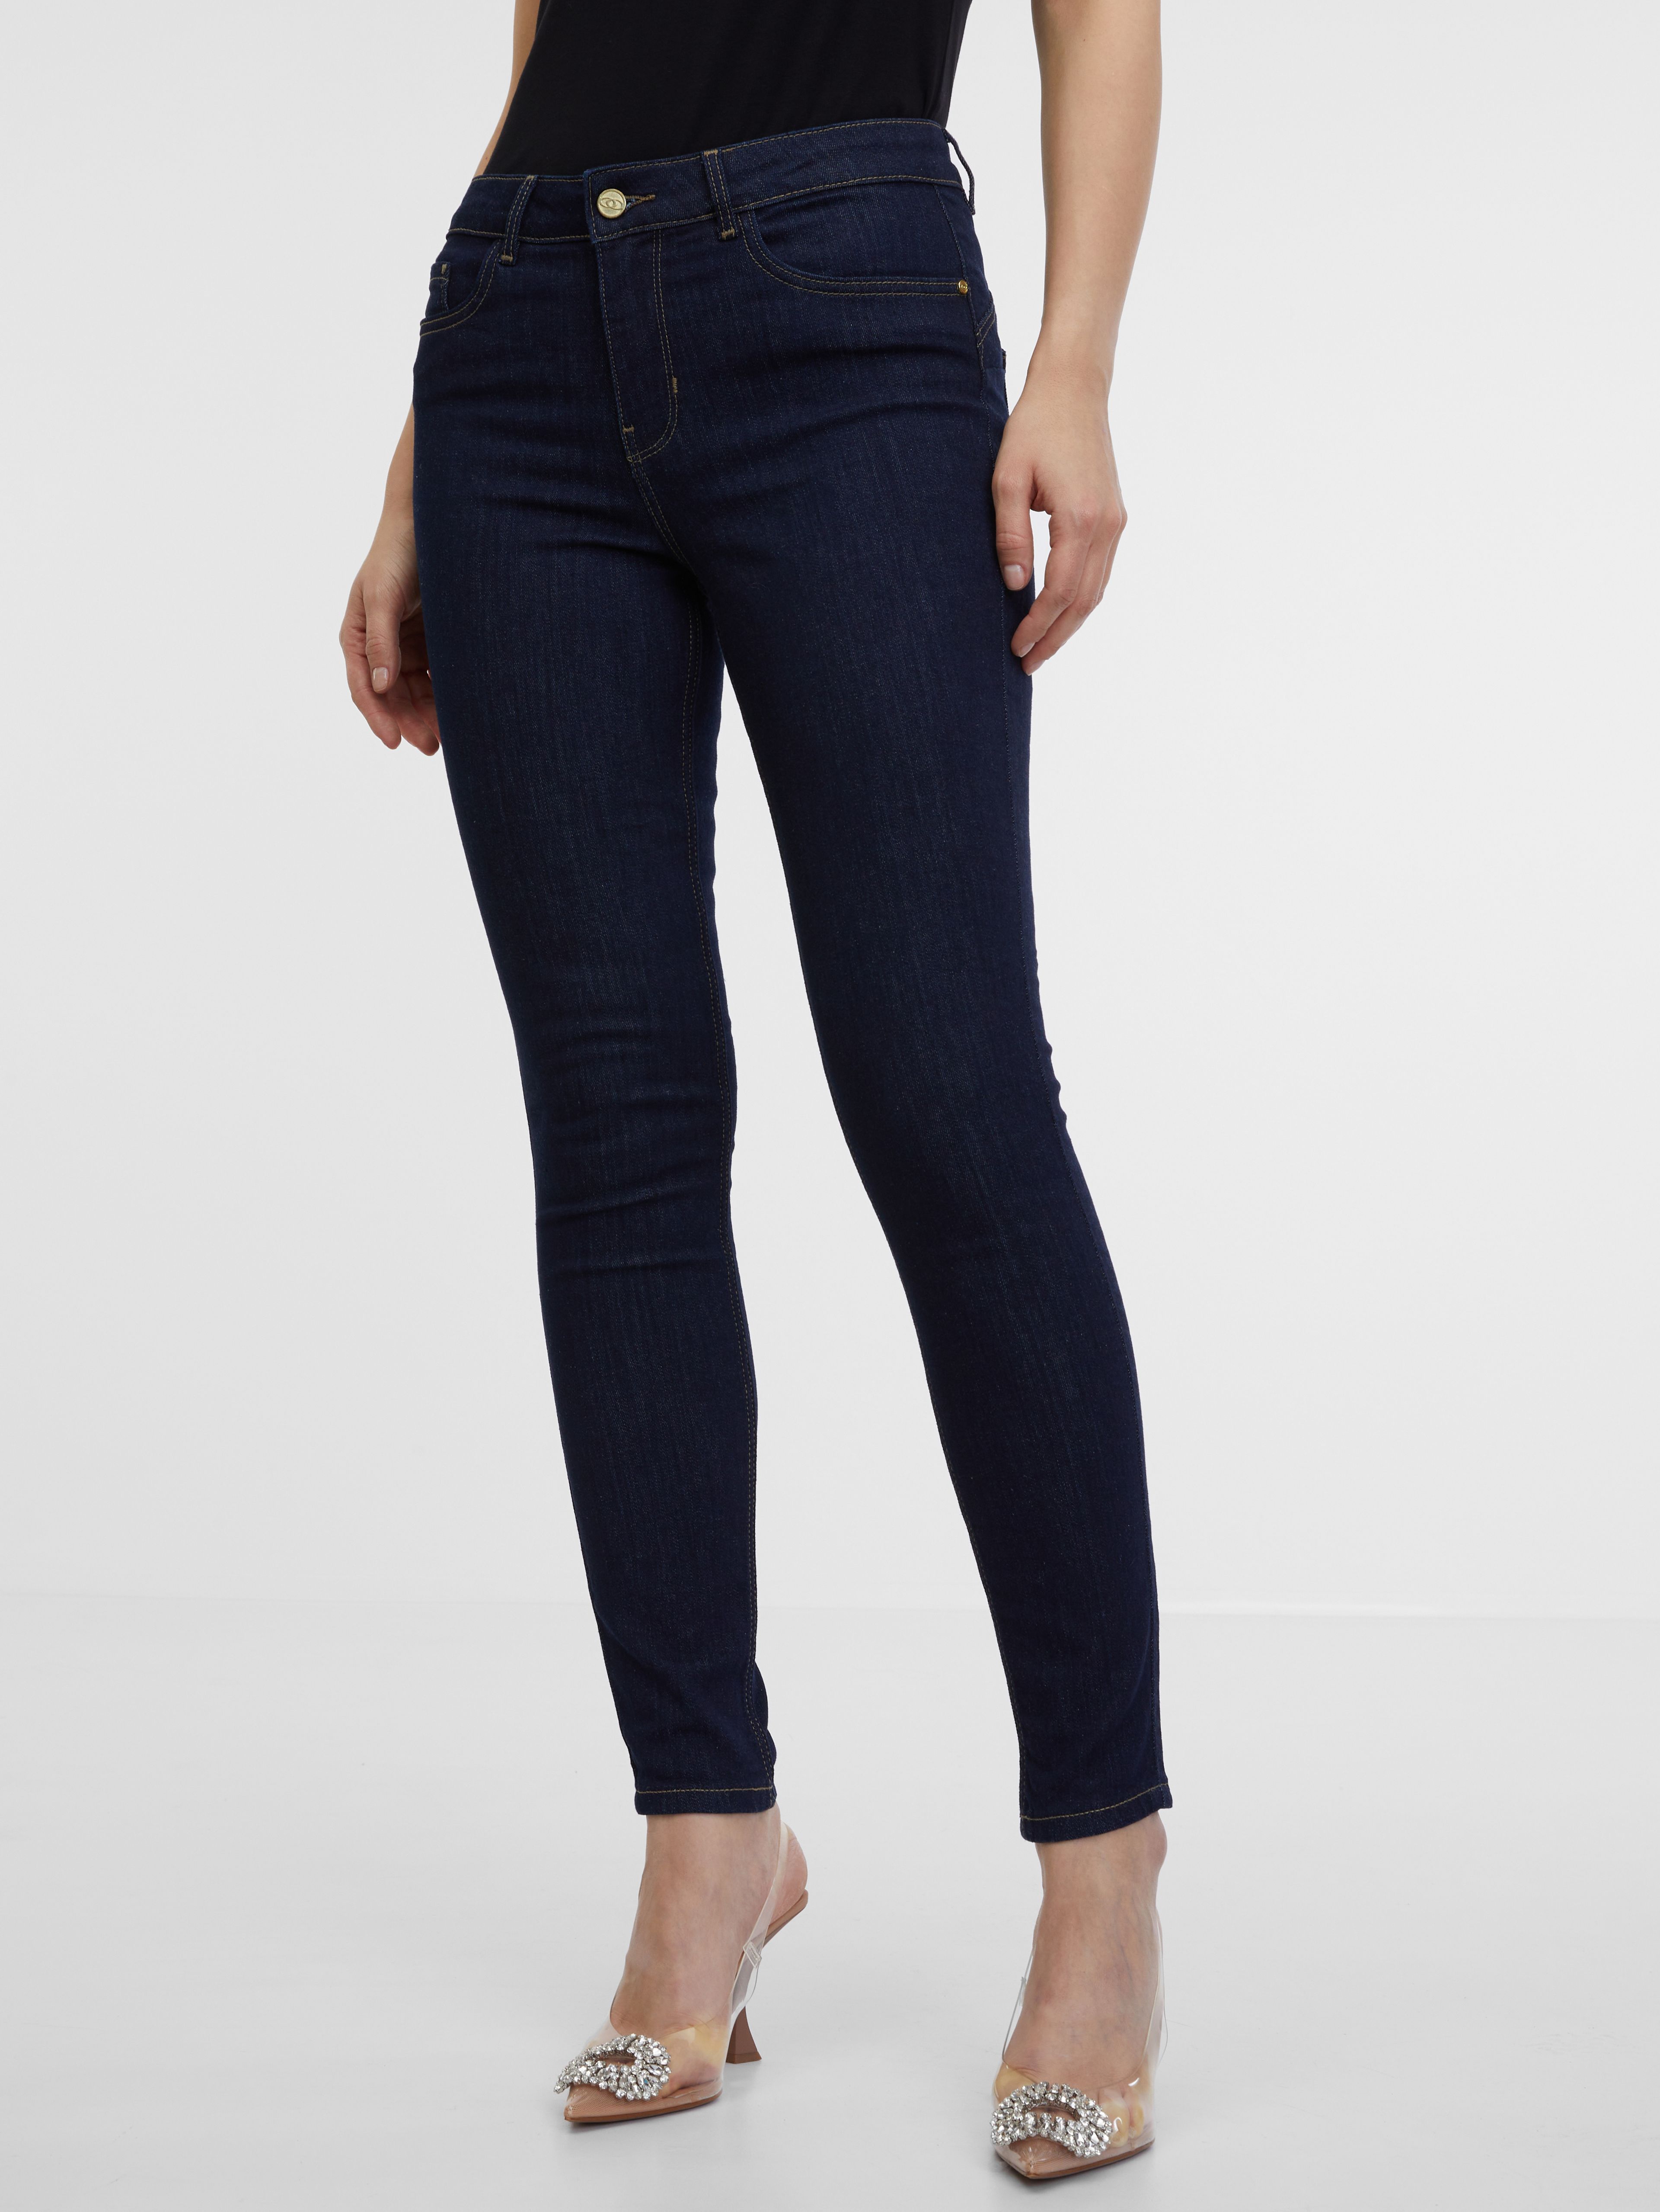 Dunkelblaue Skinny-Fit-Jeans Damen ORSAY